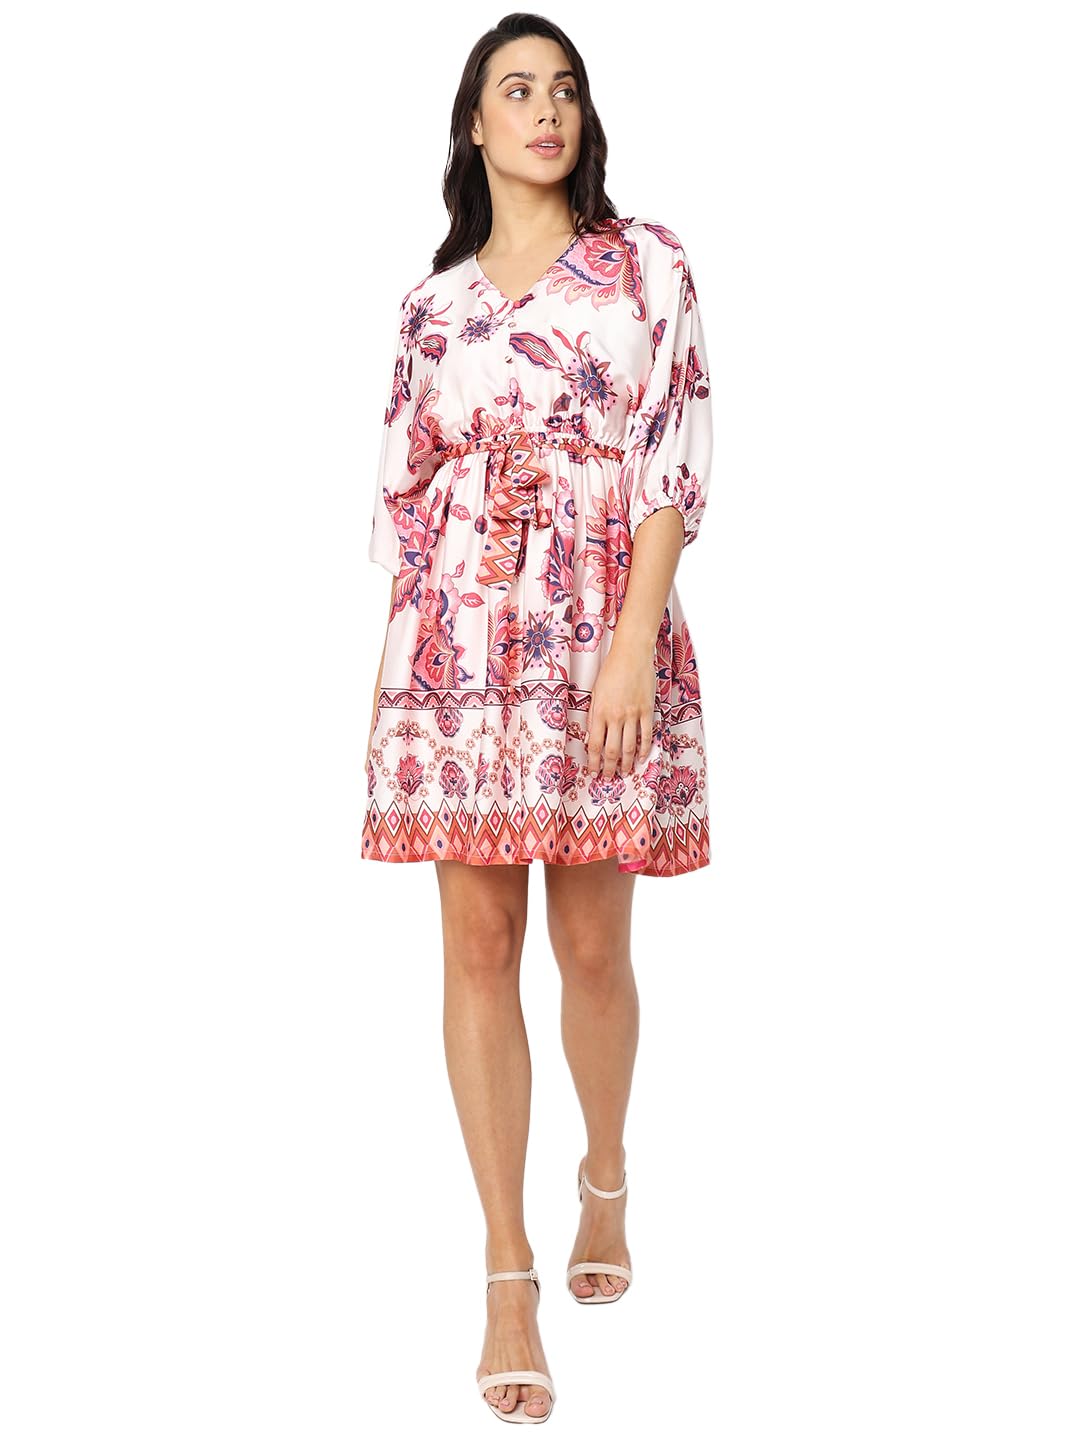 VERO MODA Women's Polyester A-Line Above The Knee Dress (Raspberry Sorbet)